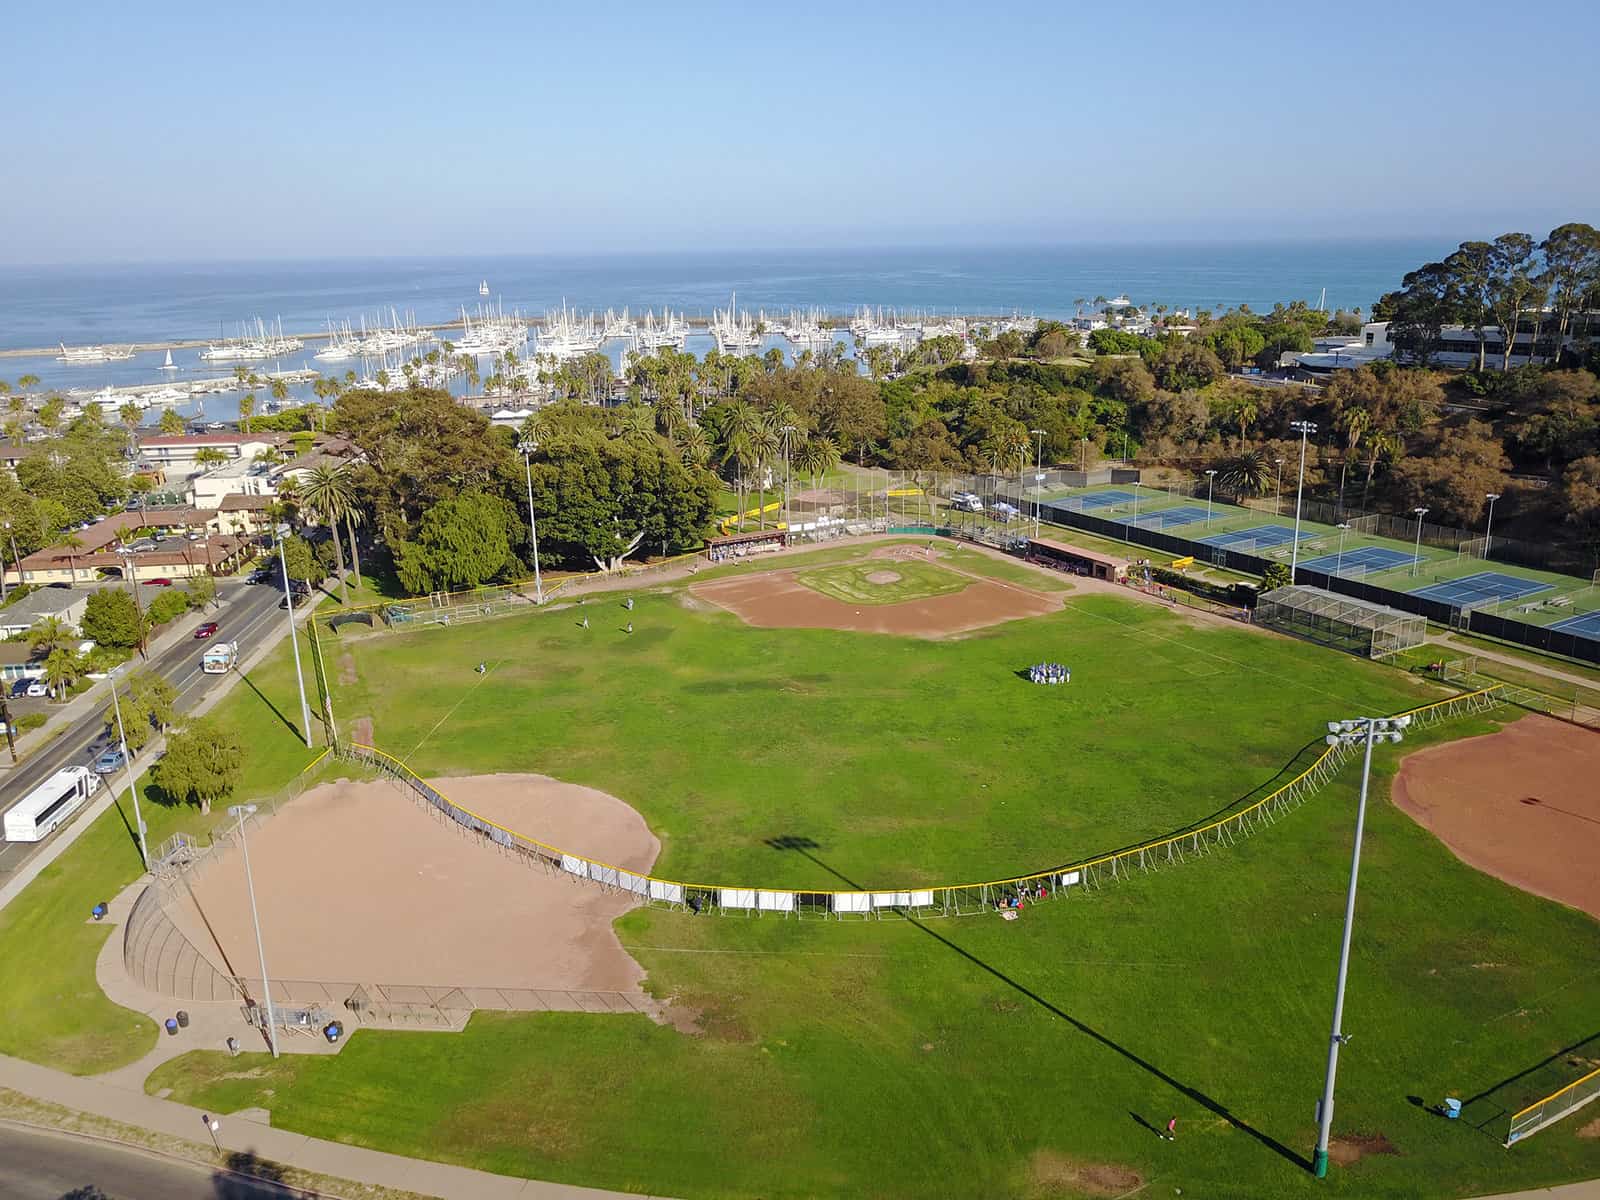 Girsh Park baseball field